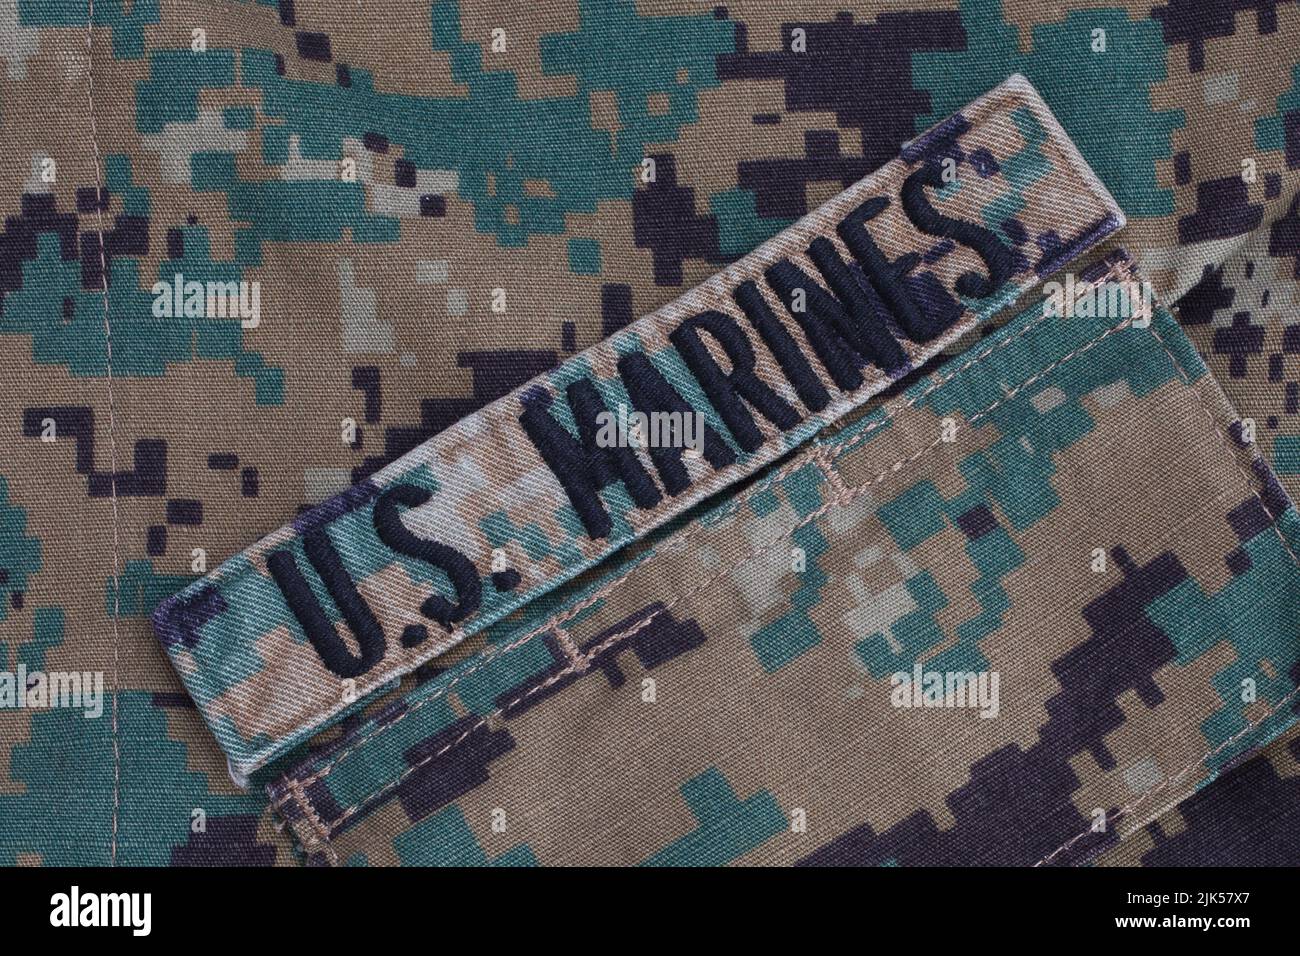 KYIV, UKRAINE - October 20, 2016. U.S. MARINES branch tape with camouflage uniform Stock Photo